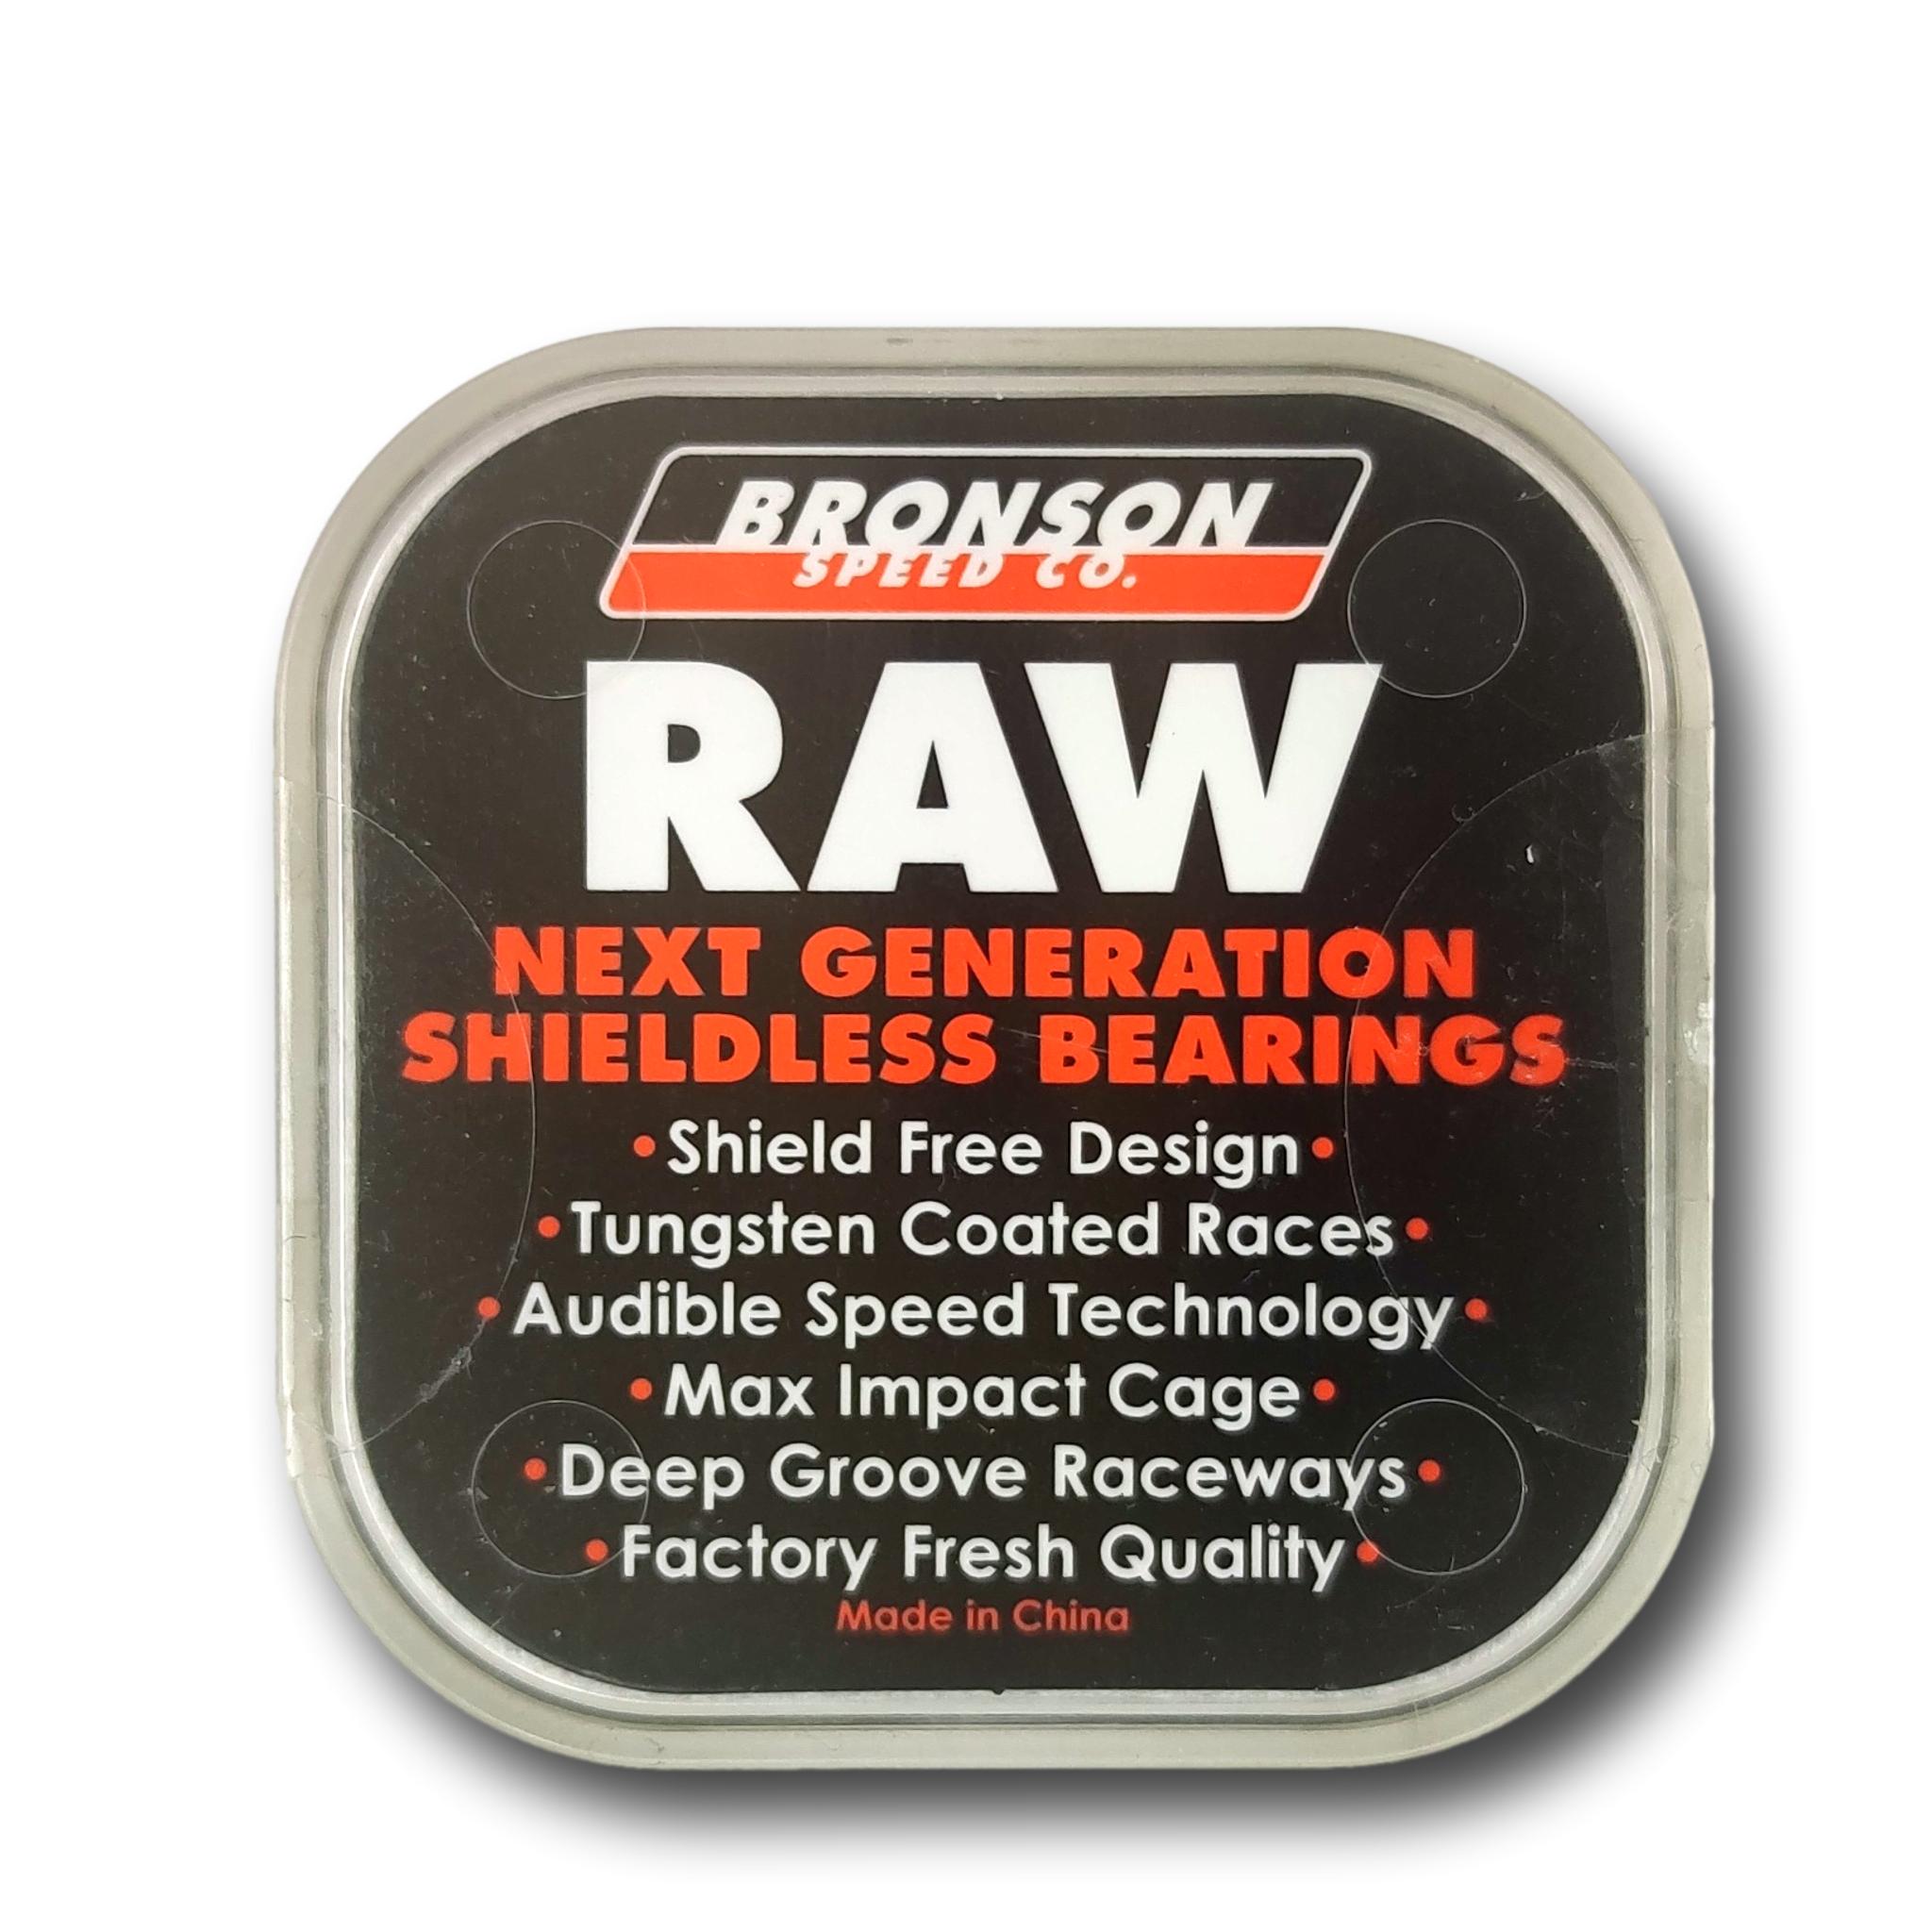 BRONSON RAW NEXT GENERATION SHIELDLESS BEARINGS